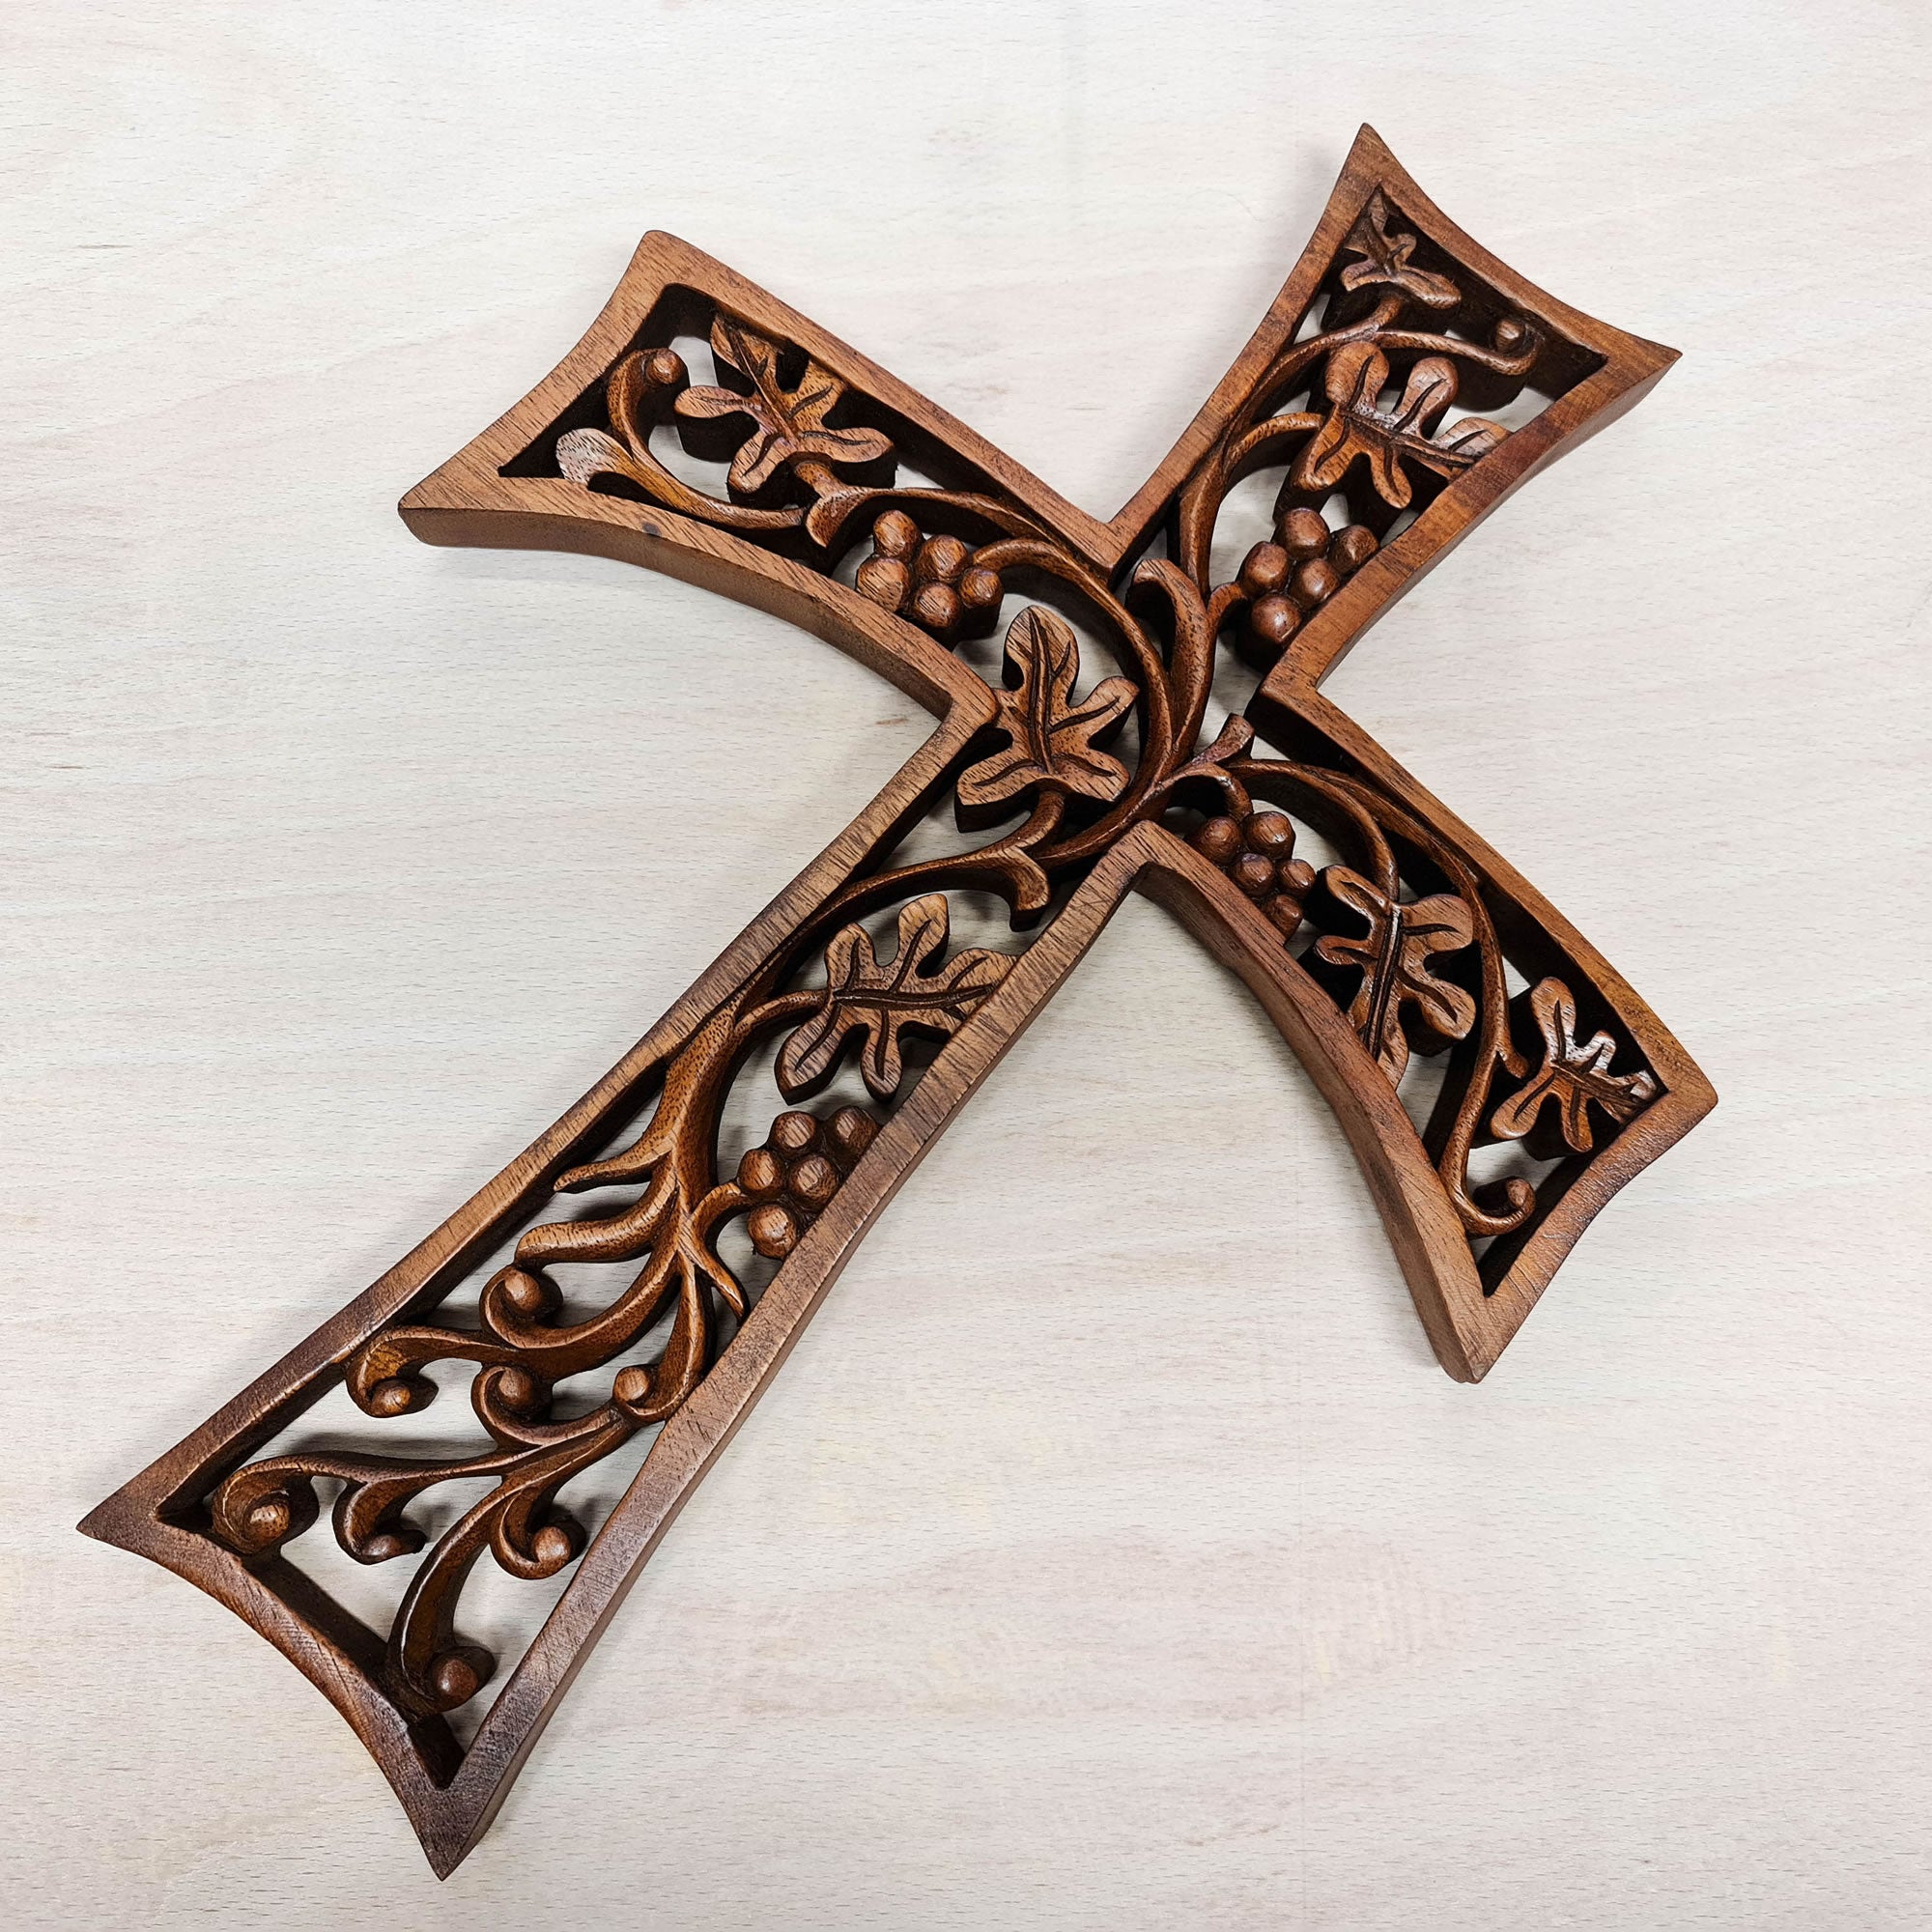 Christian Prayer Cross Tree of Life Carved Wooden Decorative Panel Sculpture Art